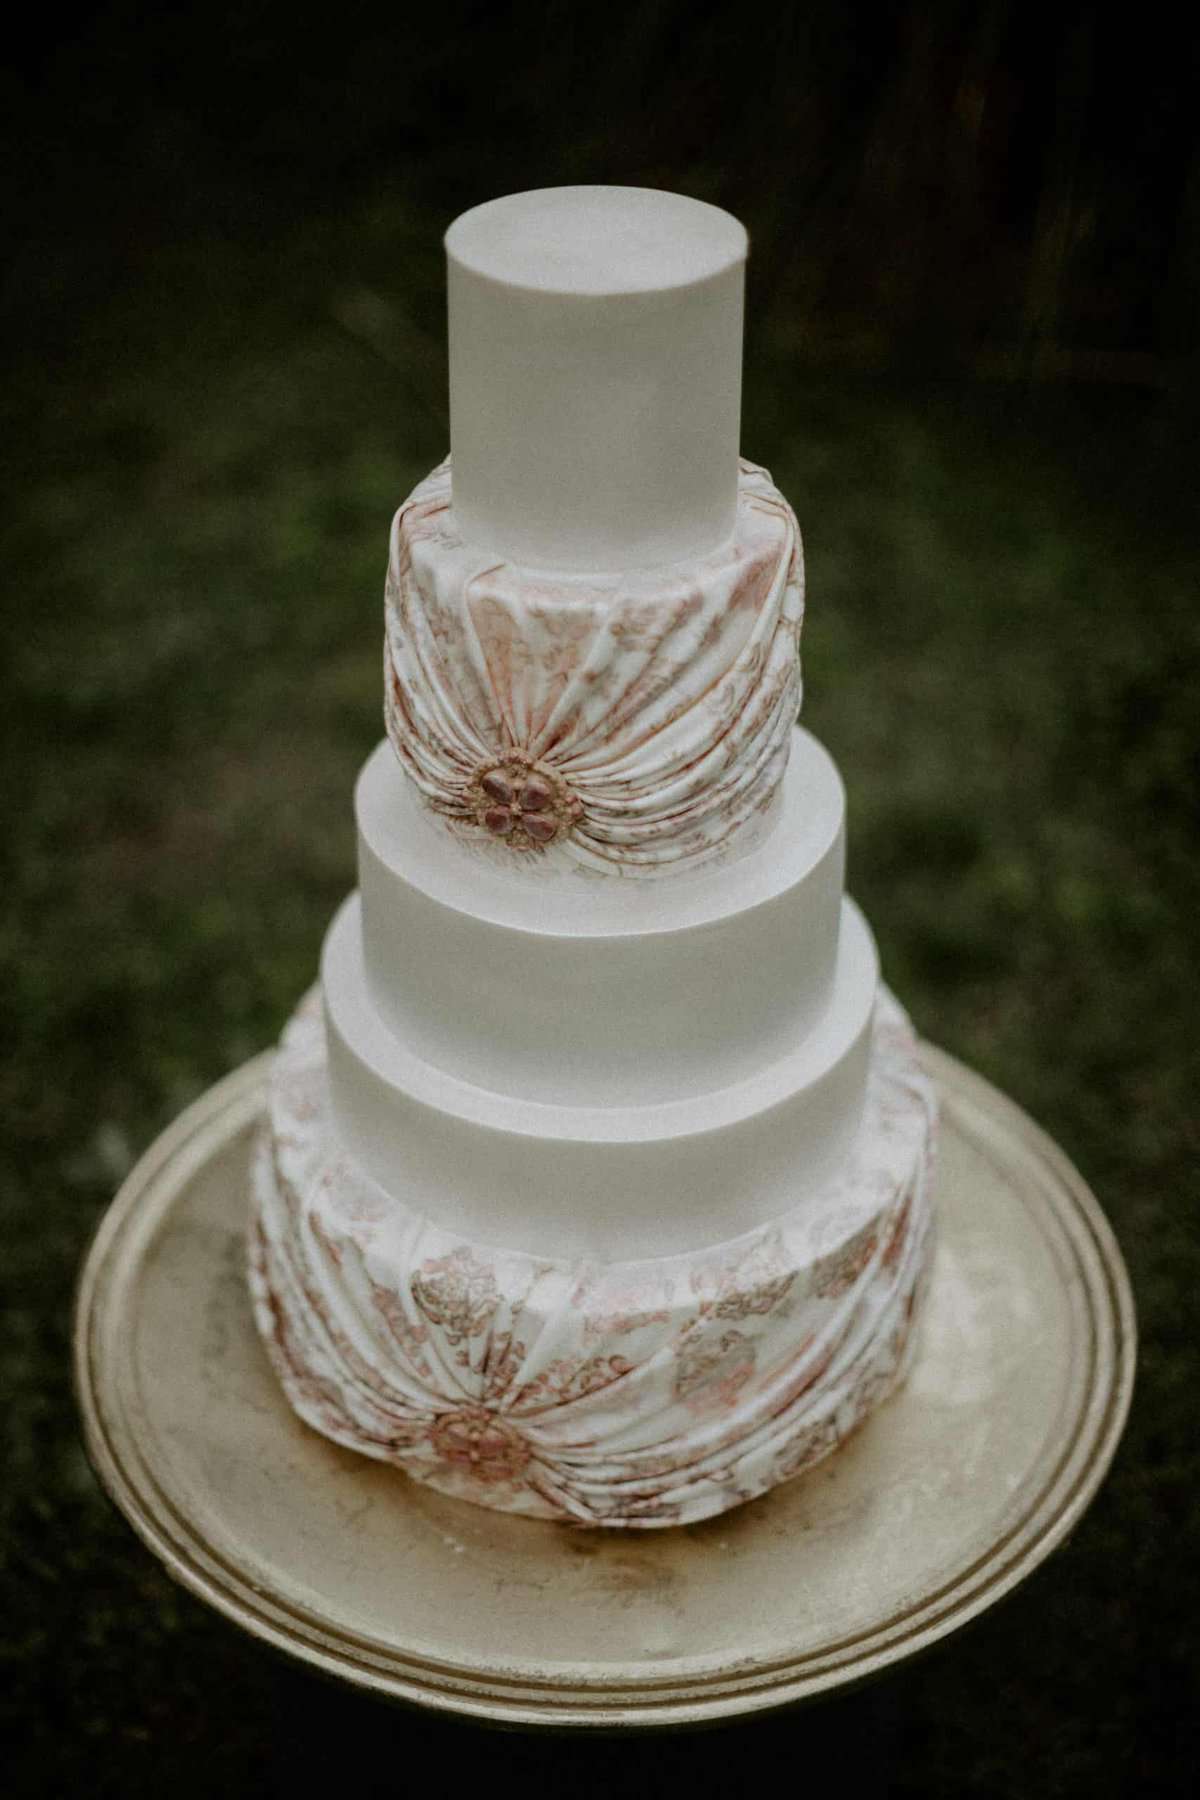 Romantic, vintage inspired wedding cake with draped fondant details